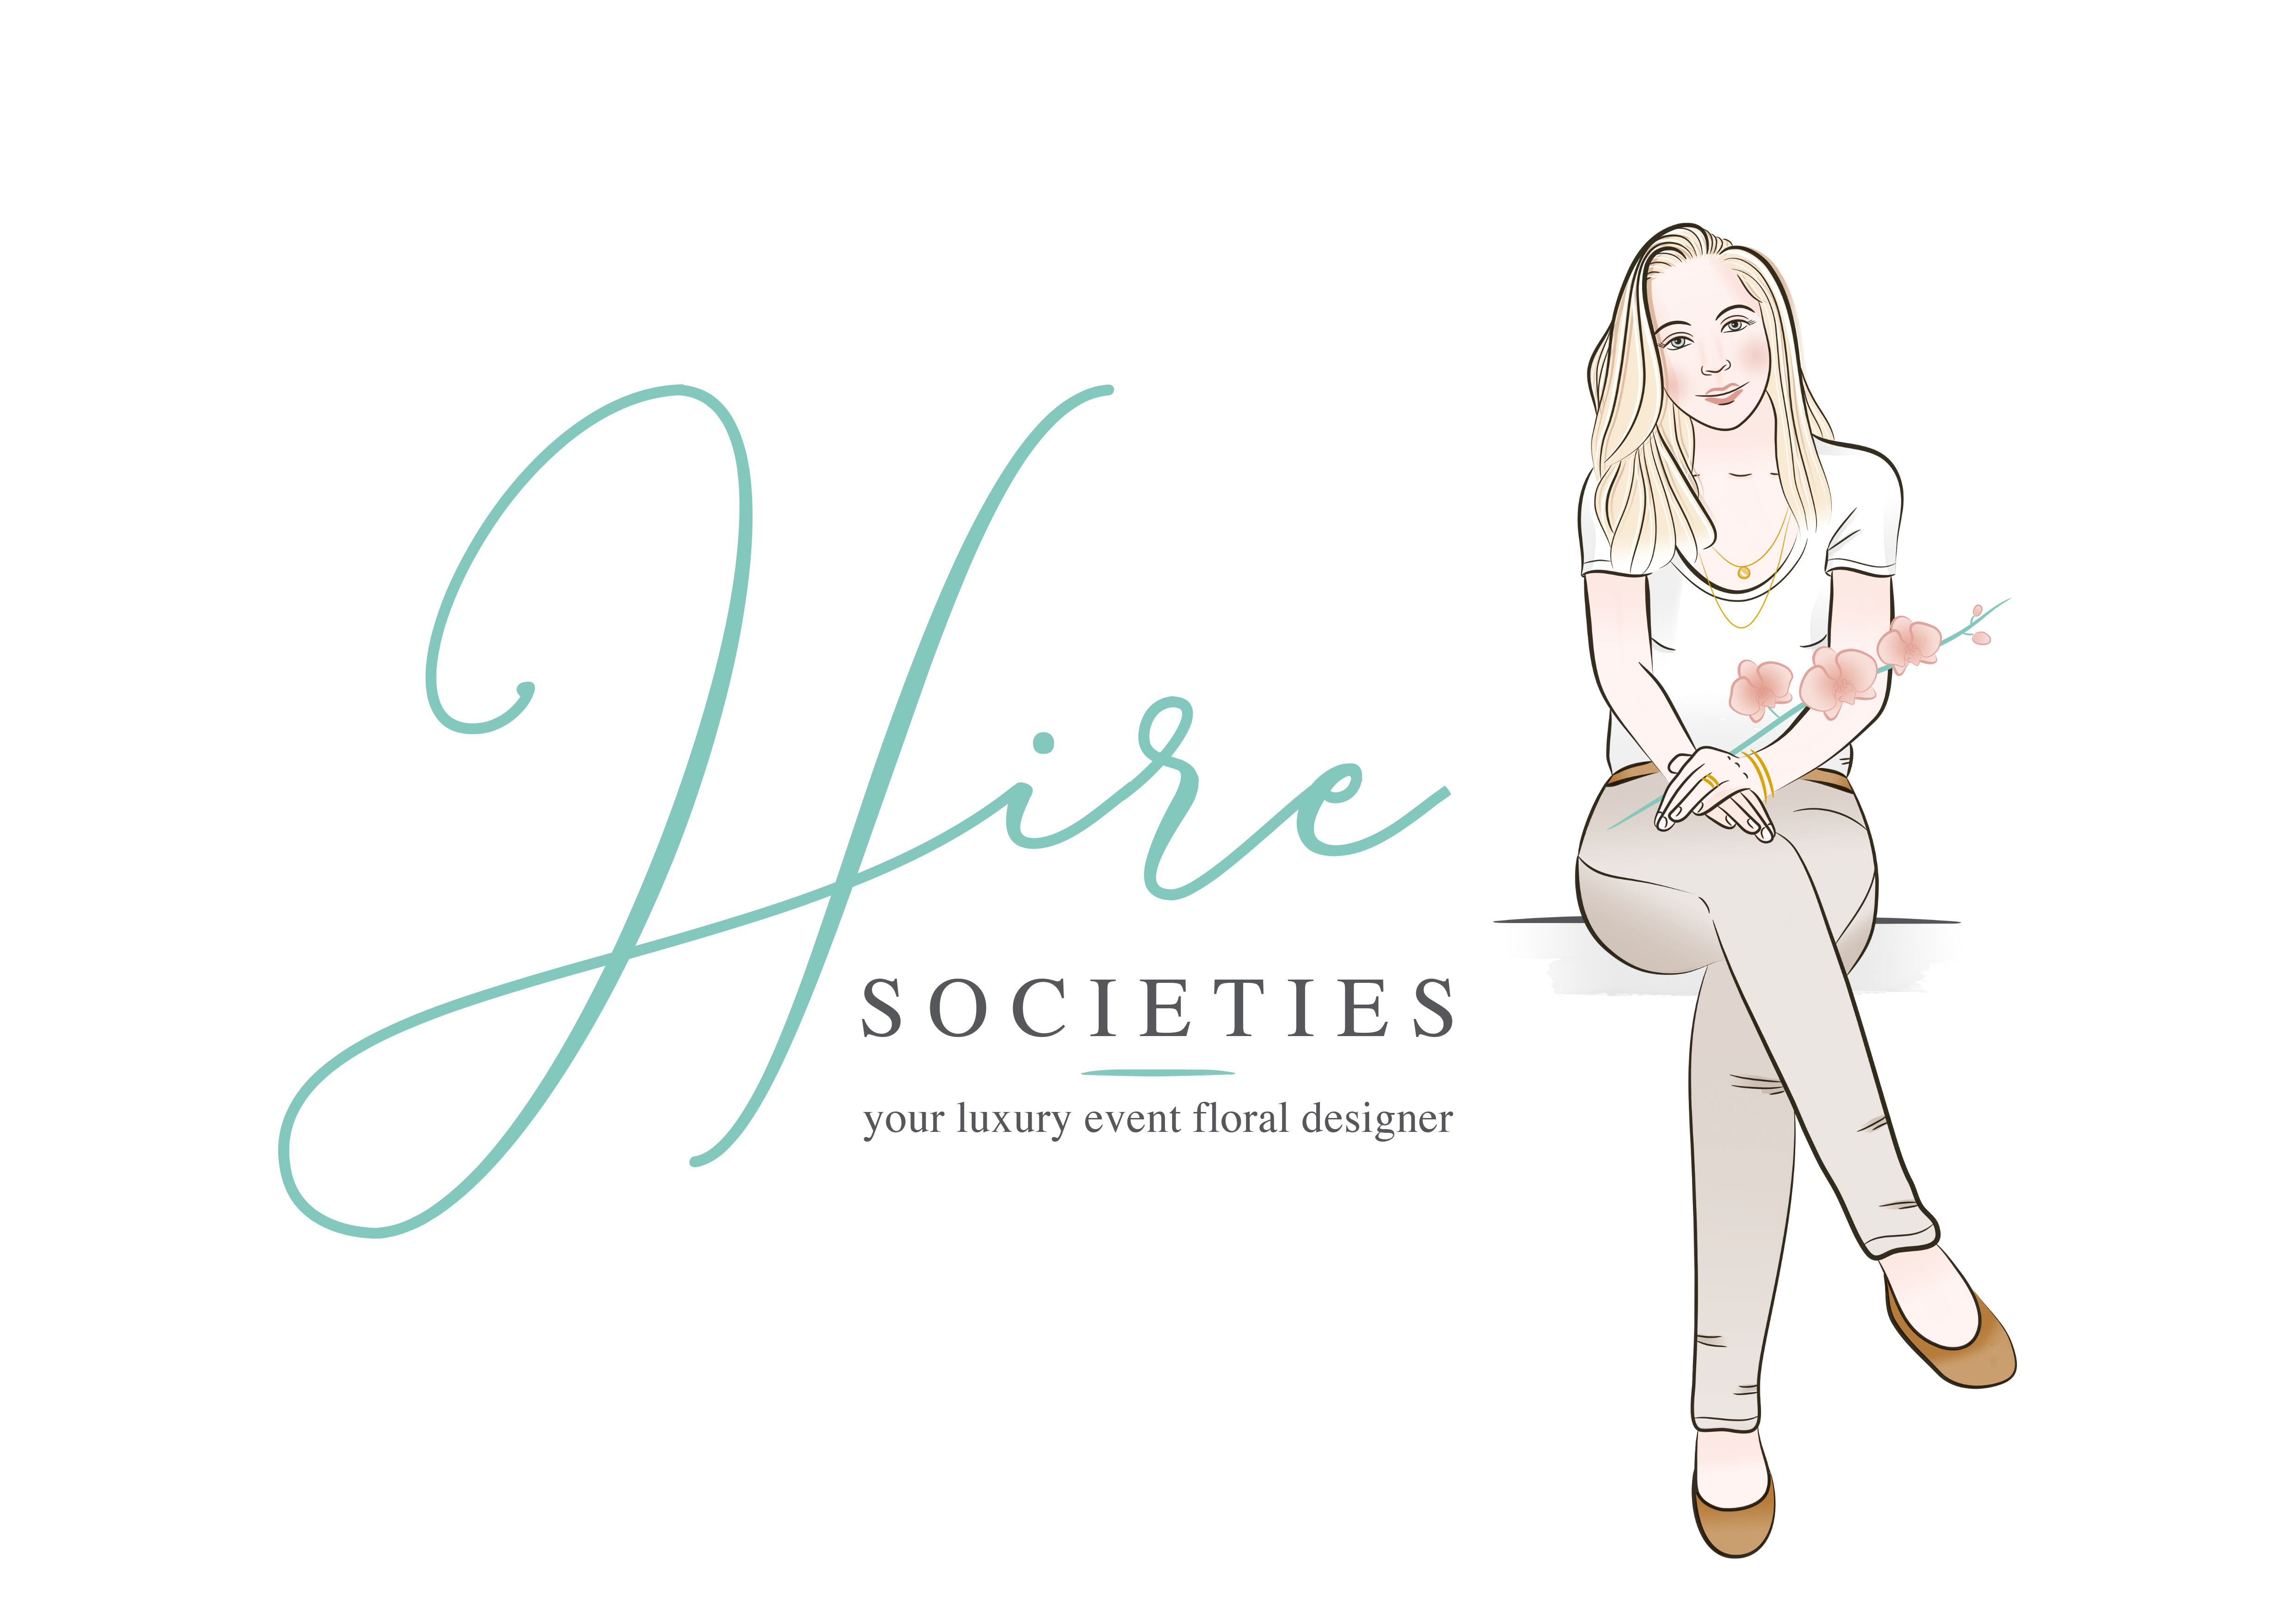 Hire societies logo